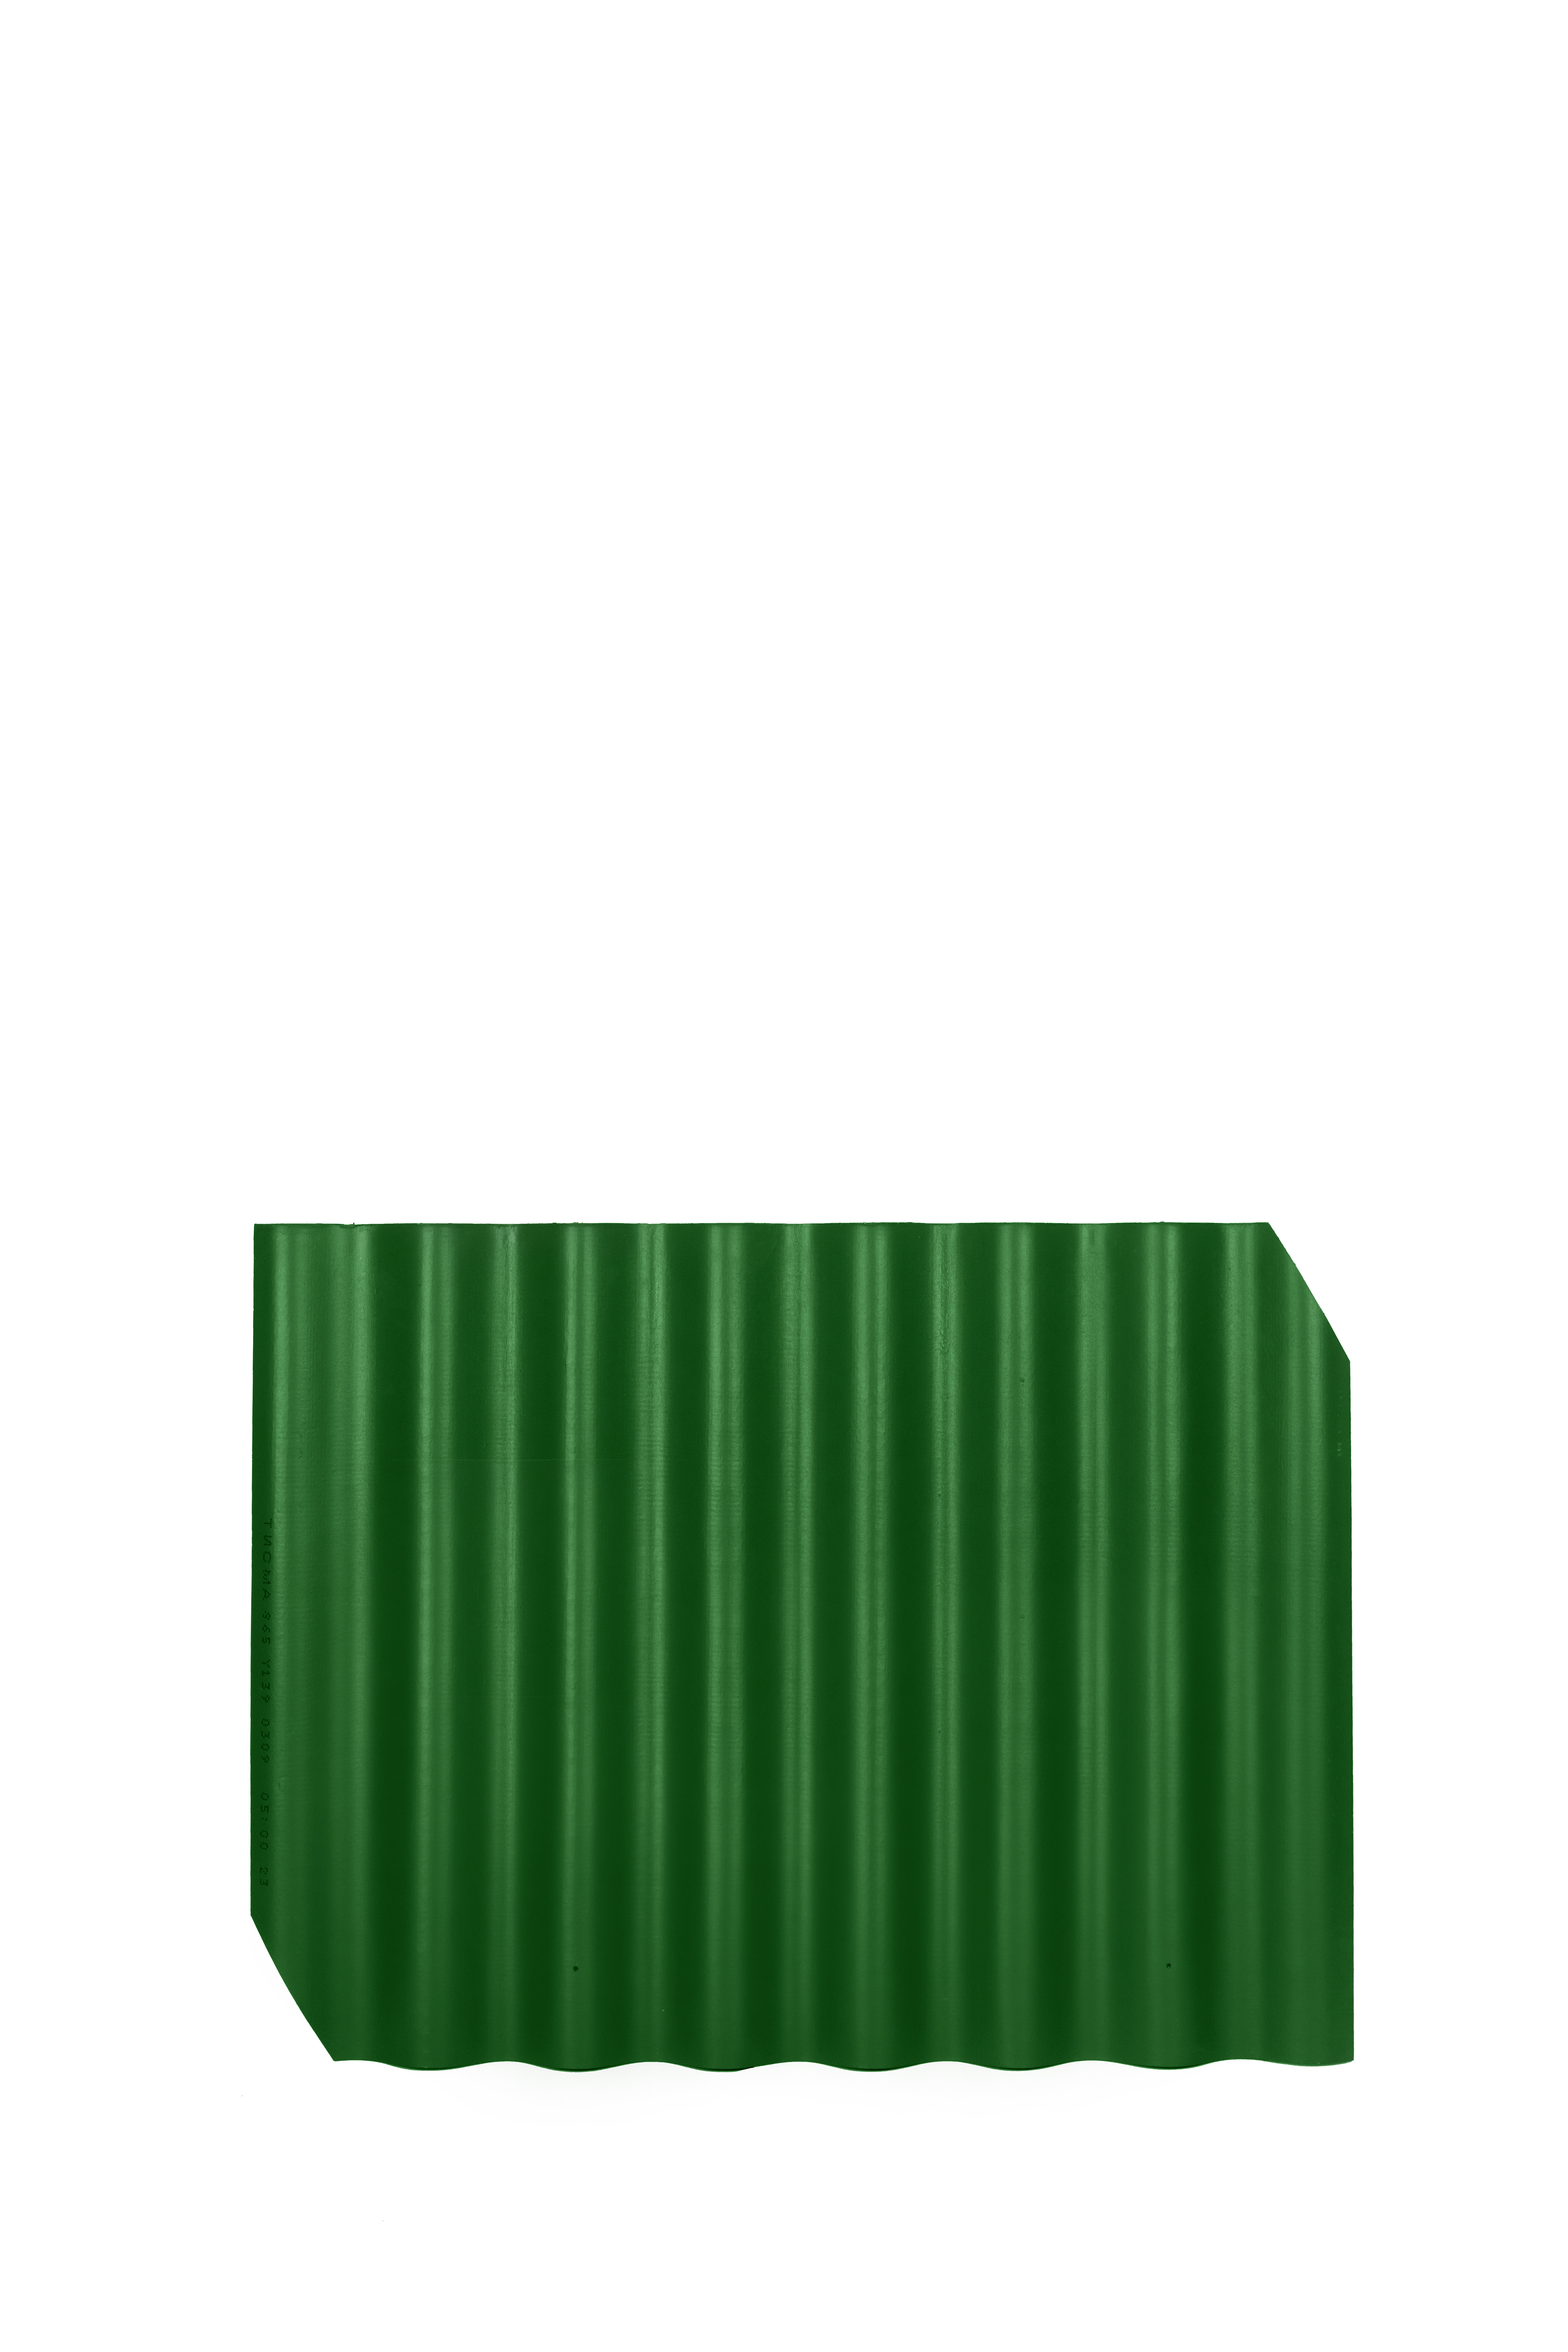 Черепица фиброцементная ТИСМА 40/150-8-865х1130х5,8 зеленый Y139 ТУ